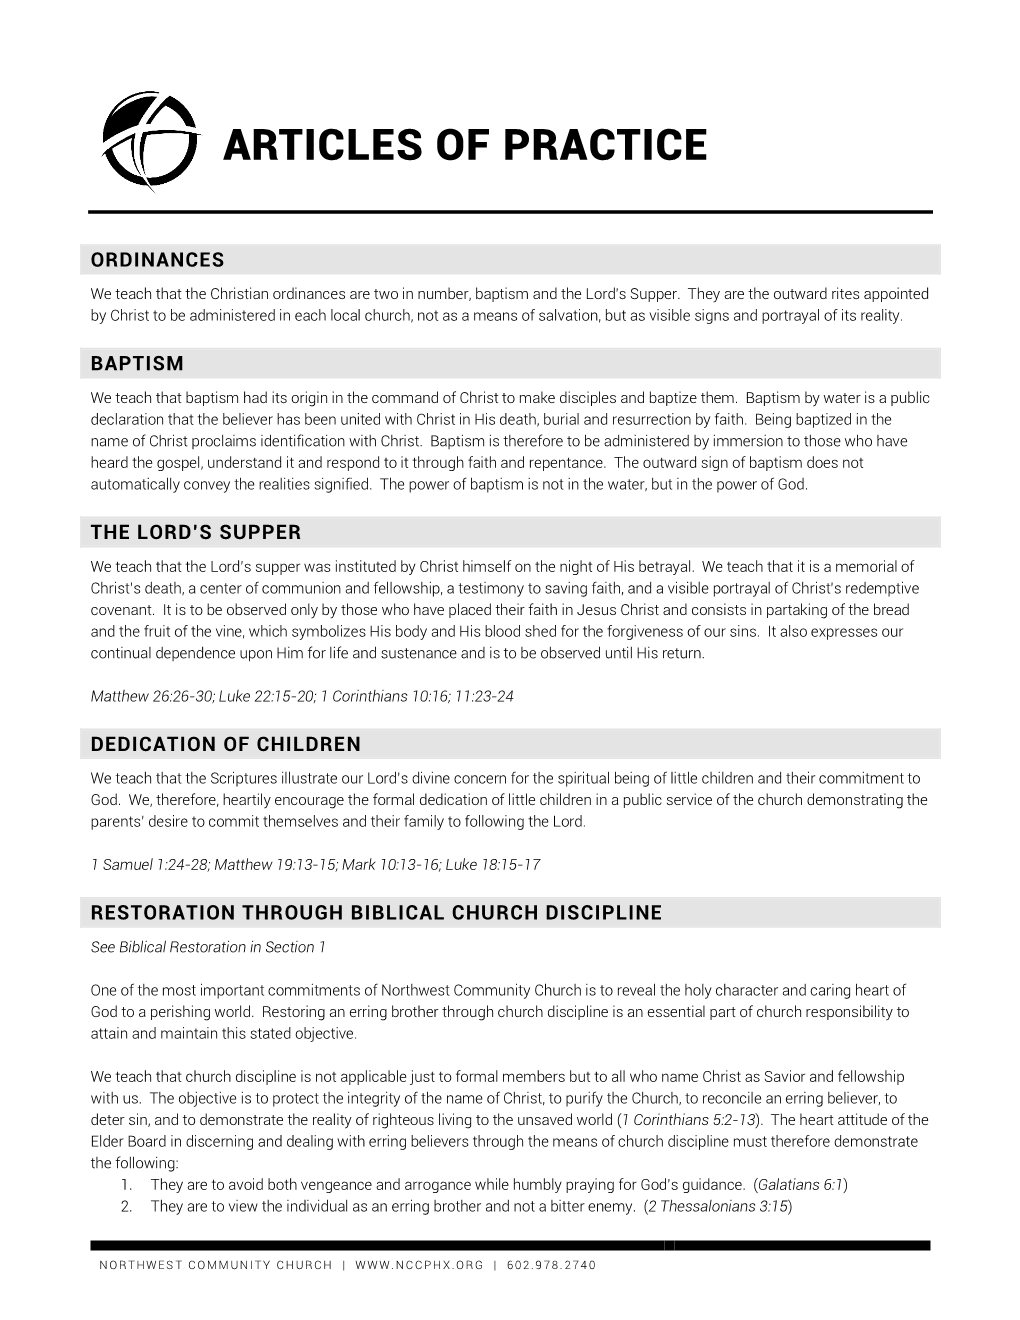 Articles of Practice